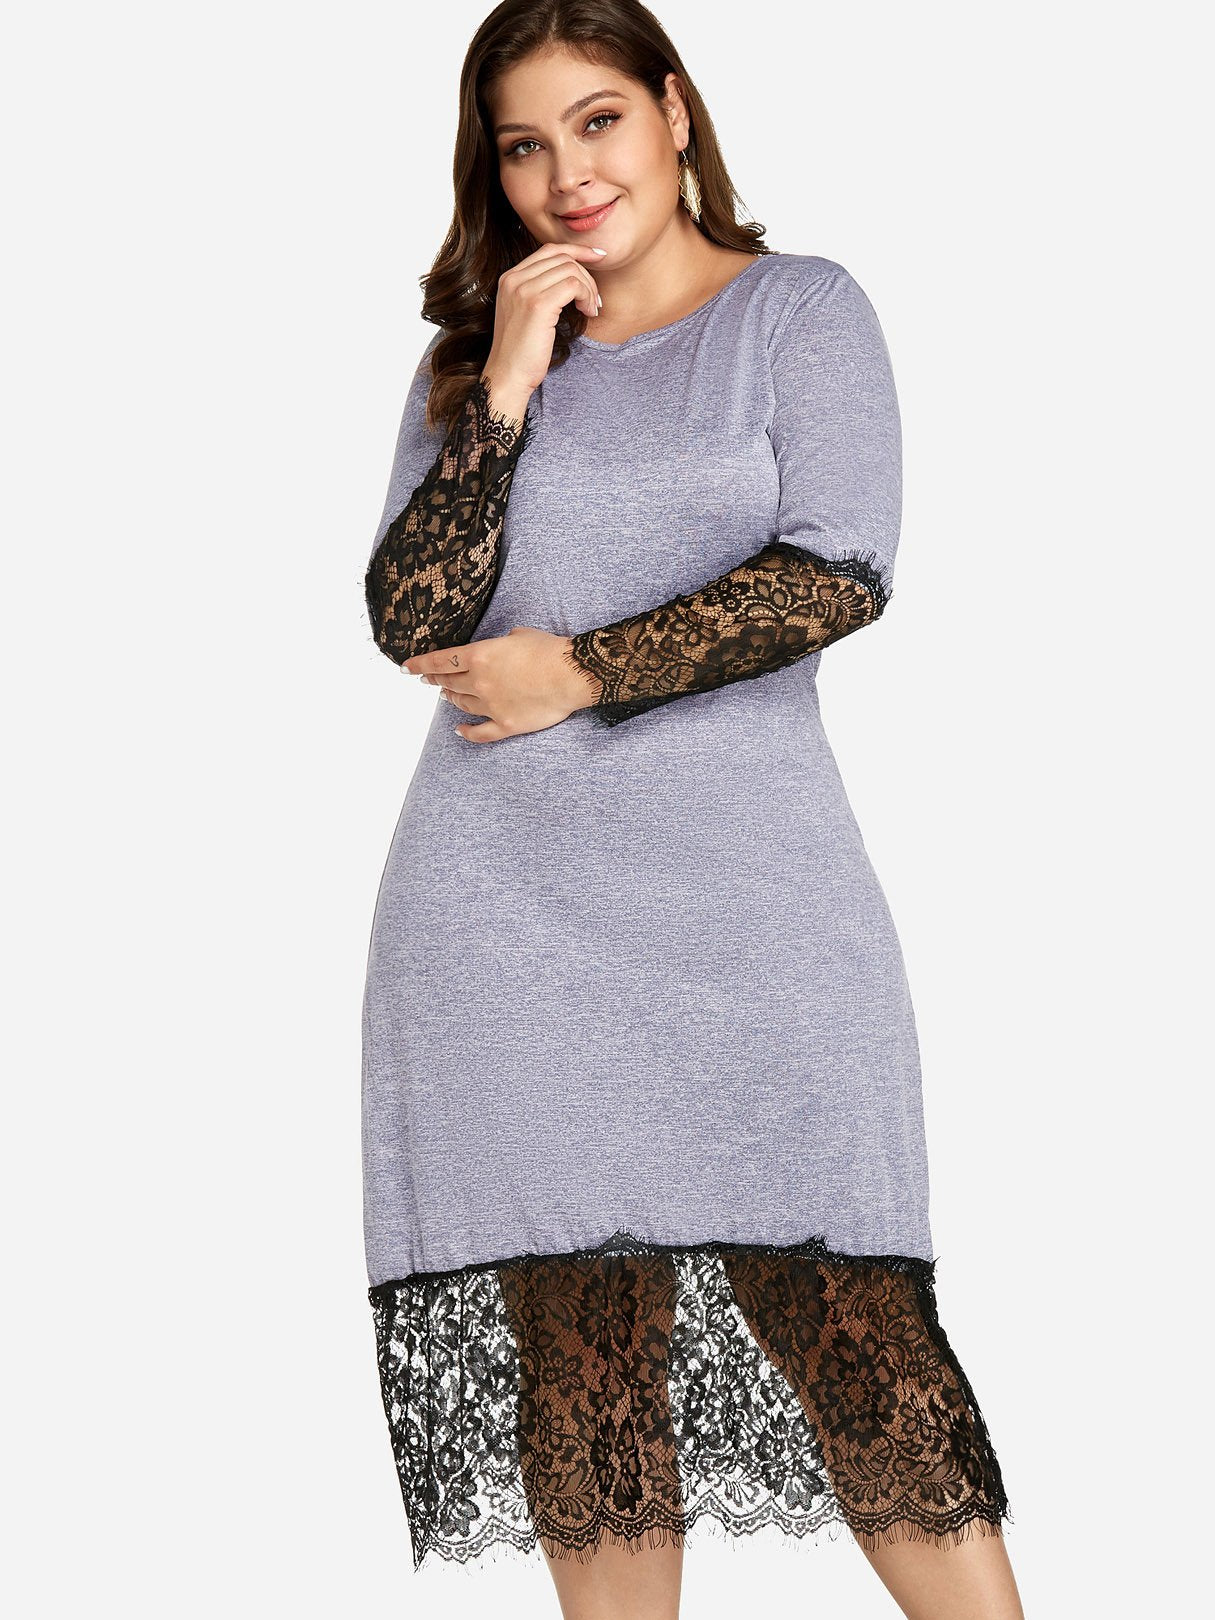 Wholesale Round Neck Plain Lace Long Sleeve Grey Plus Size Dress